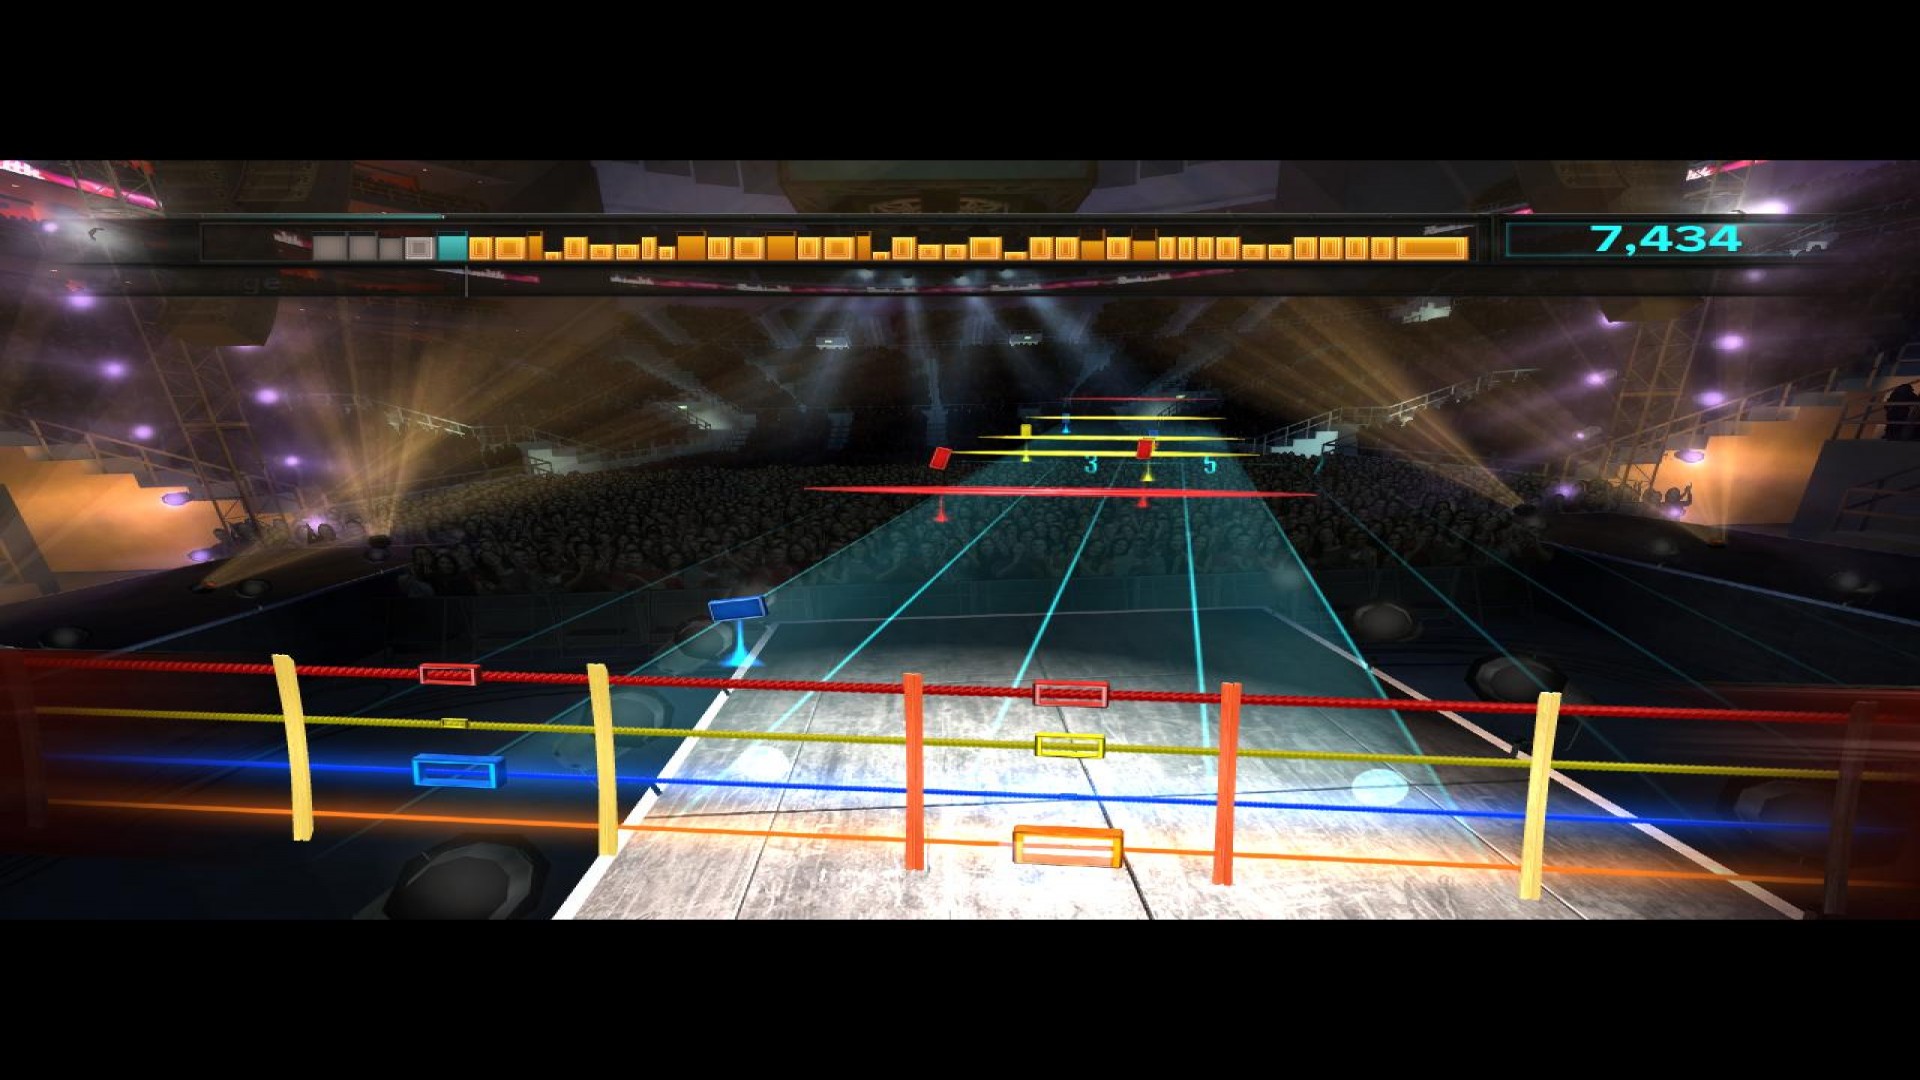 Rocksmith - Rush - Limelight screenshot